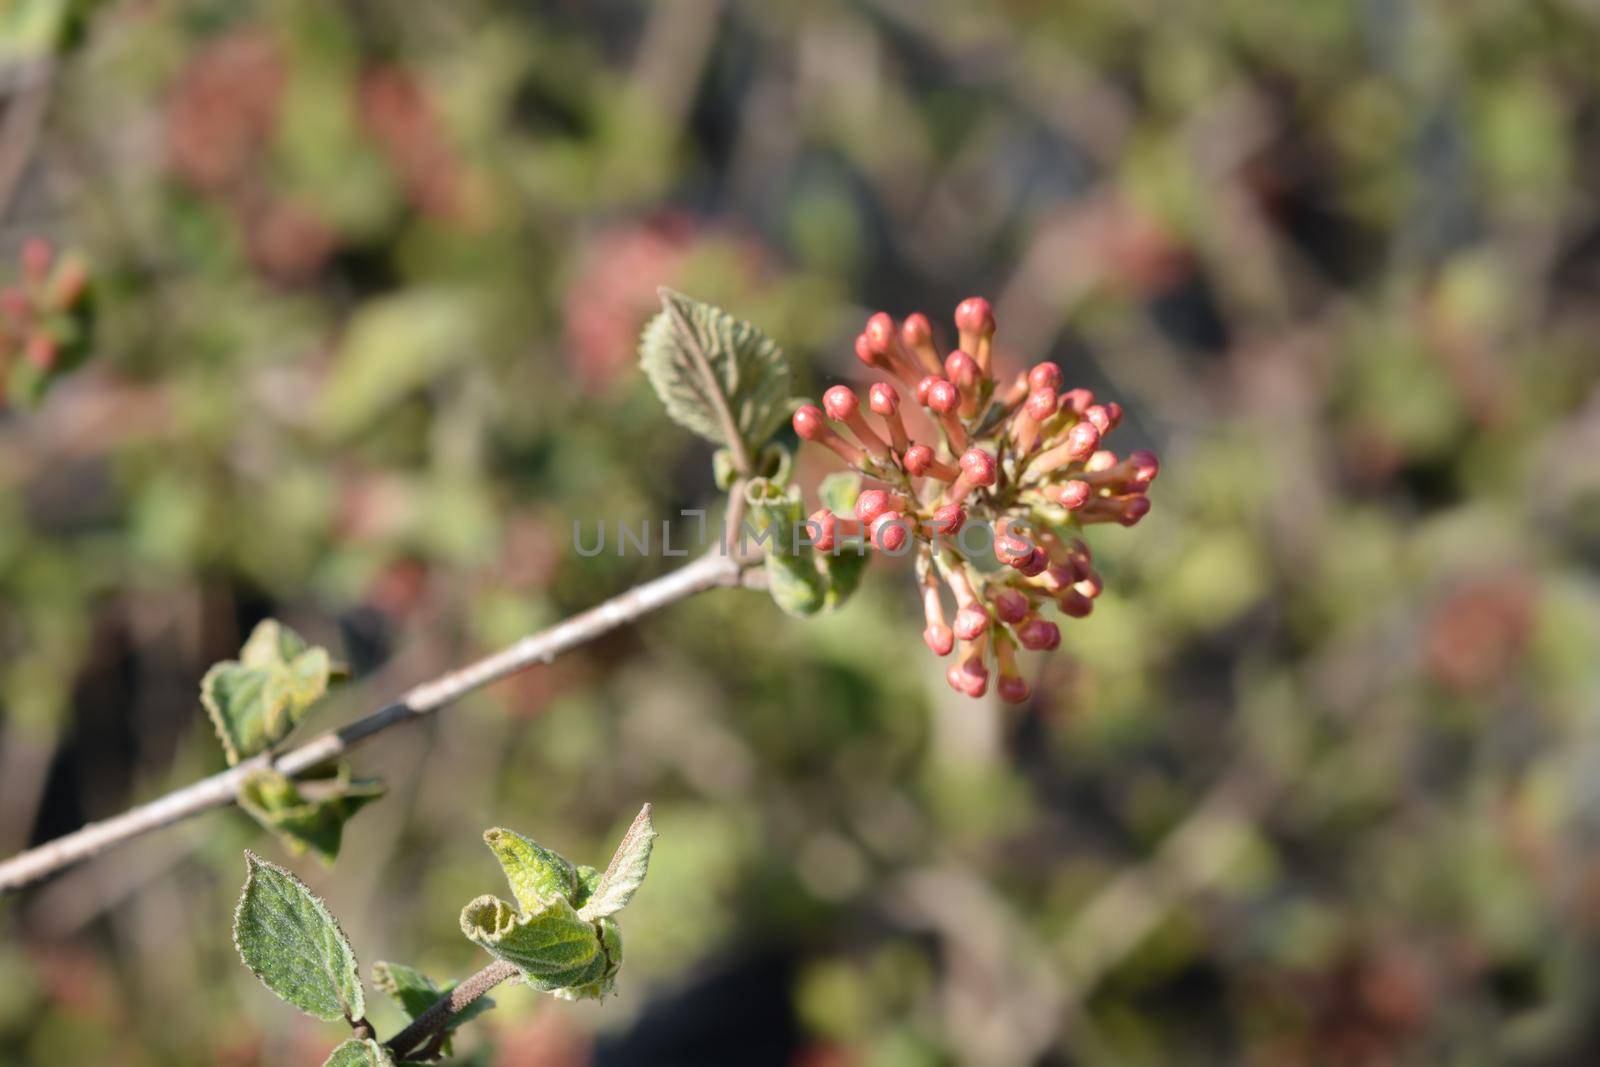 Judd viburnum flower buds - Latin name - Viburnum x juddii